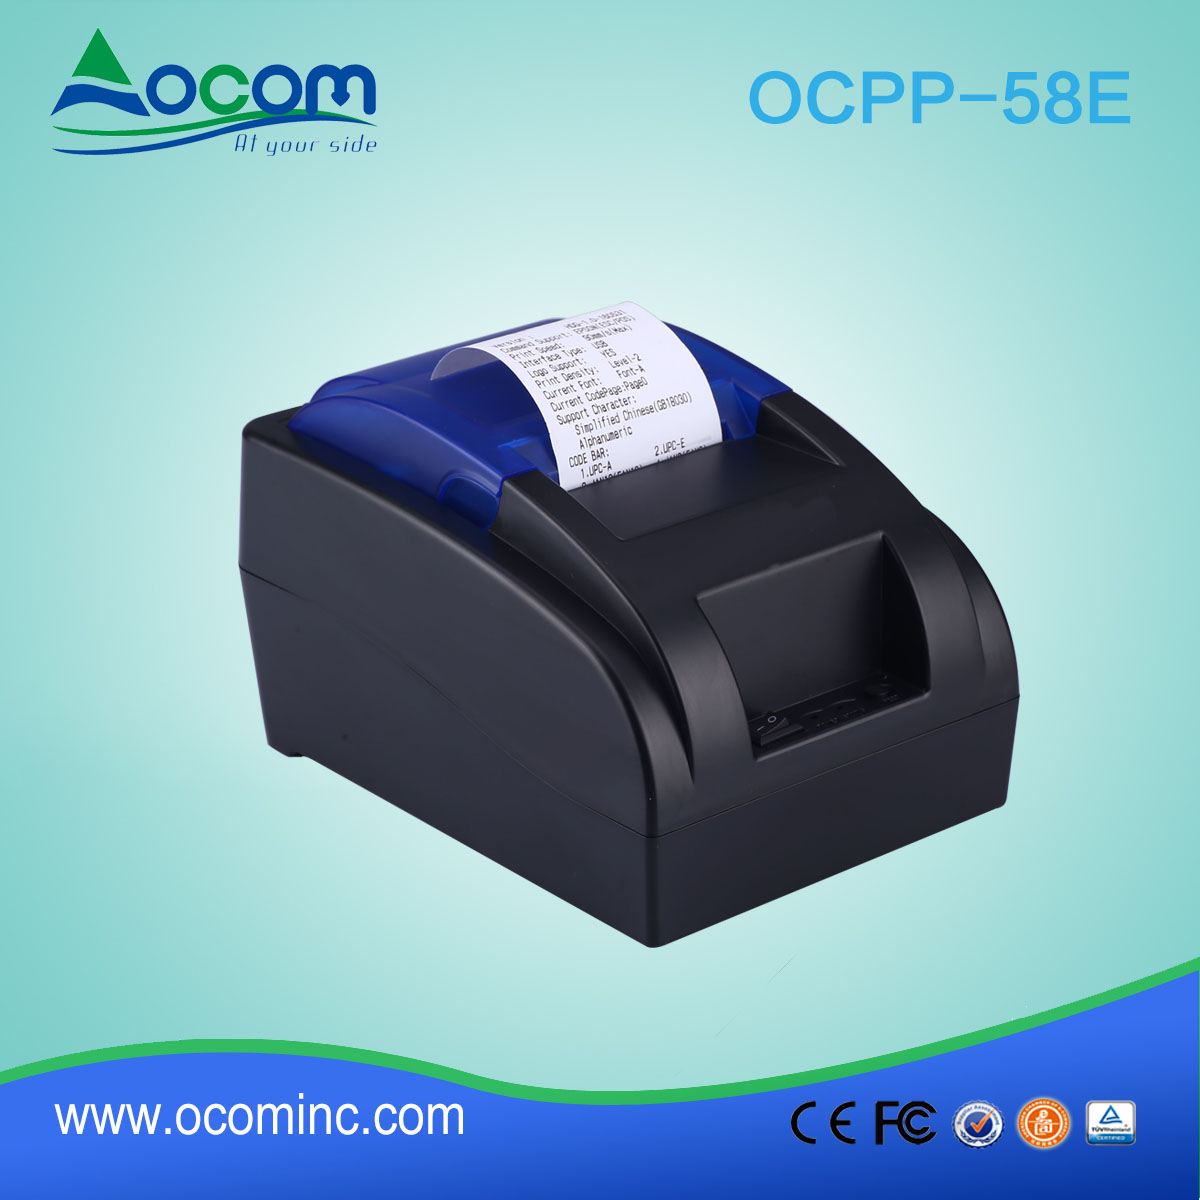 Impresora térmica de recibos OCPP-58E 58 mm